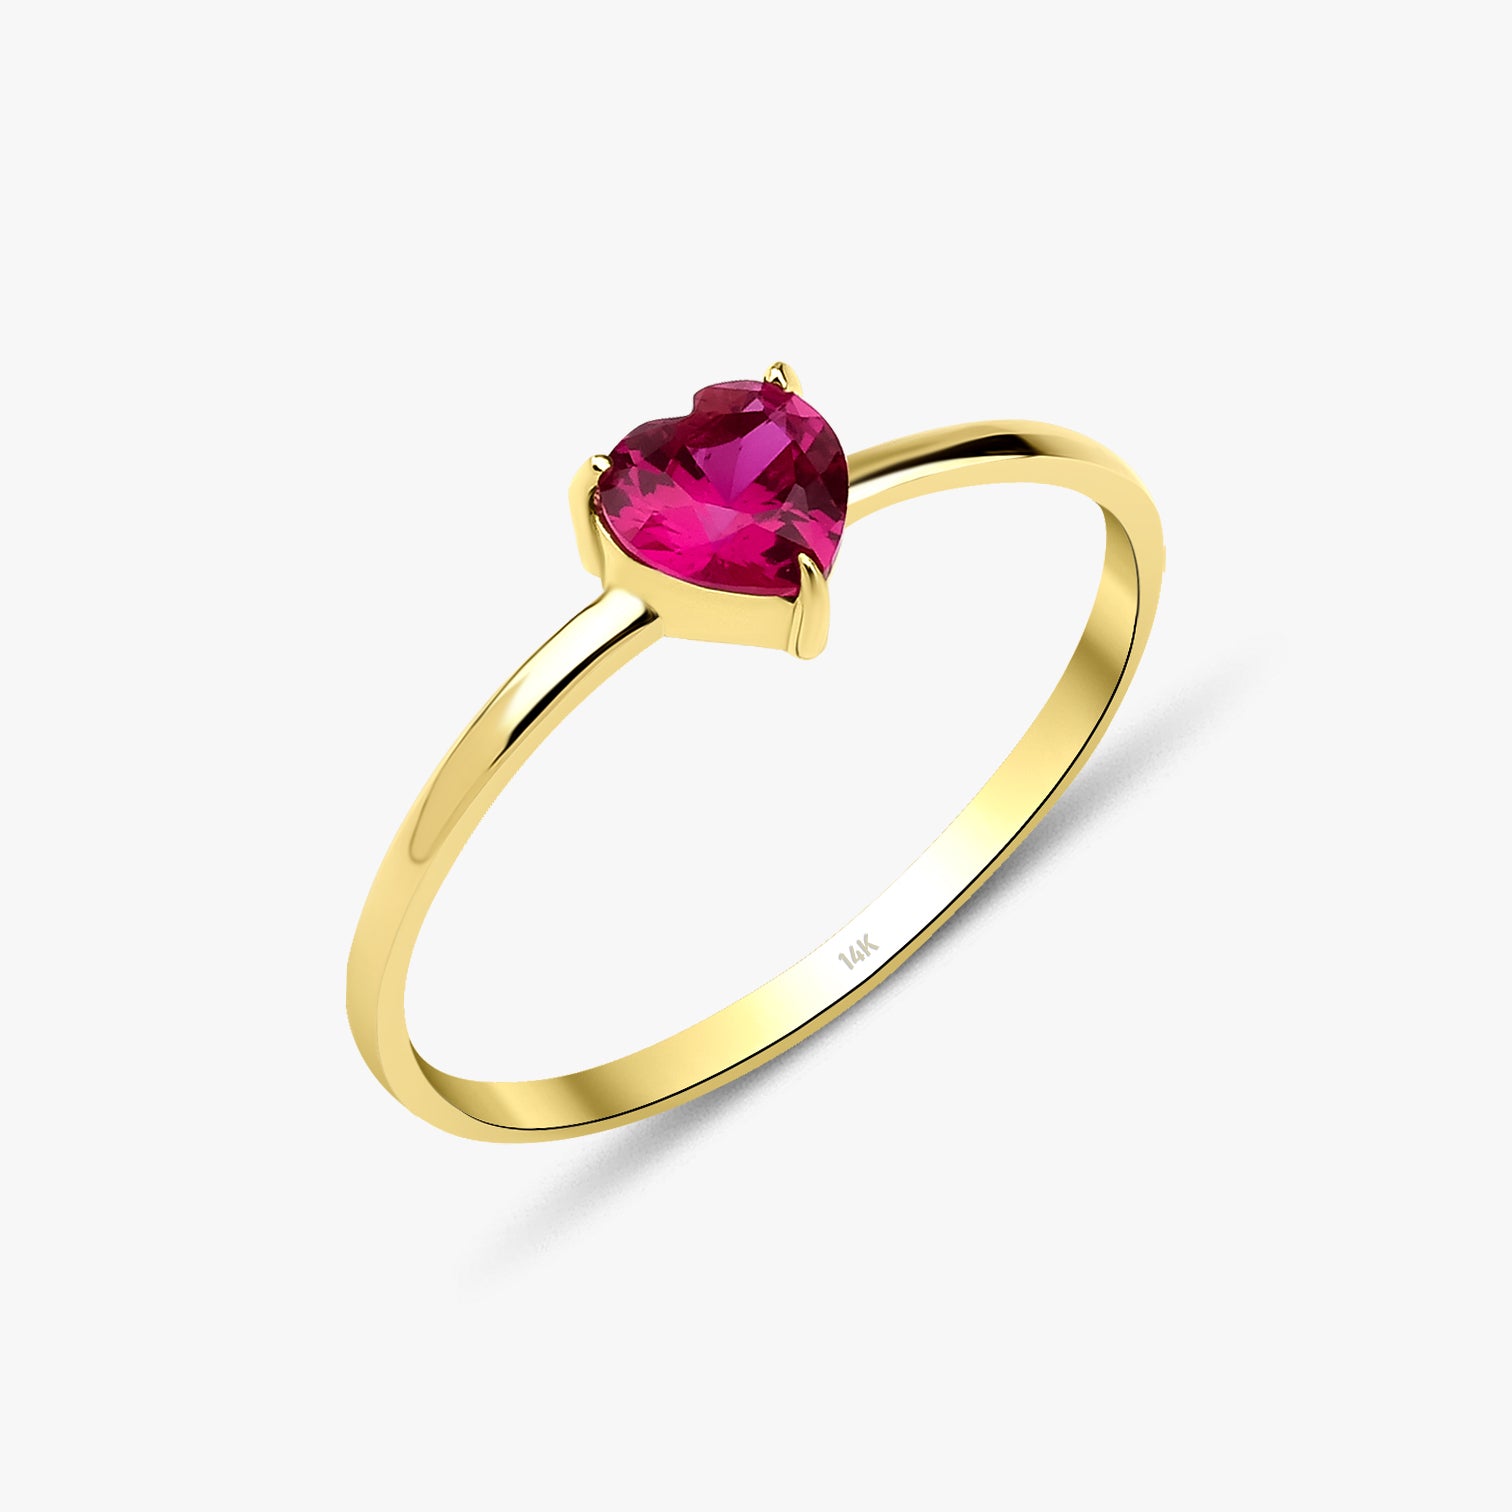 Red Heart Gemstone Ring in 14K Gold